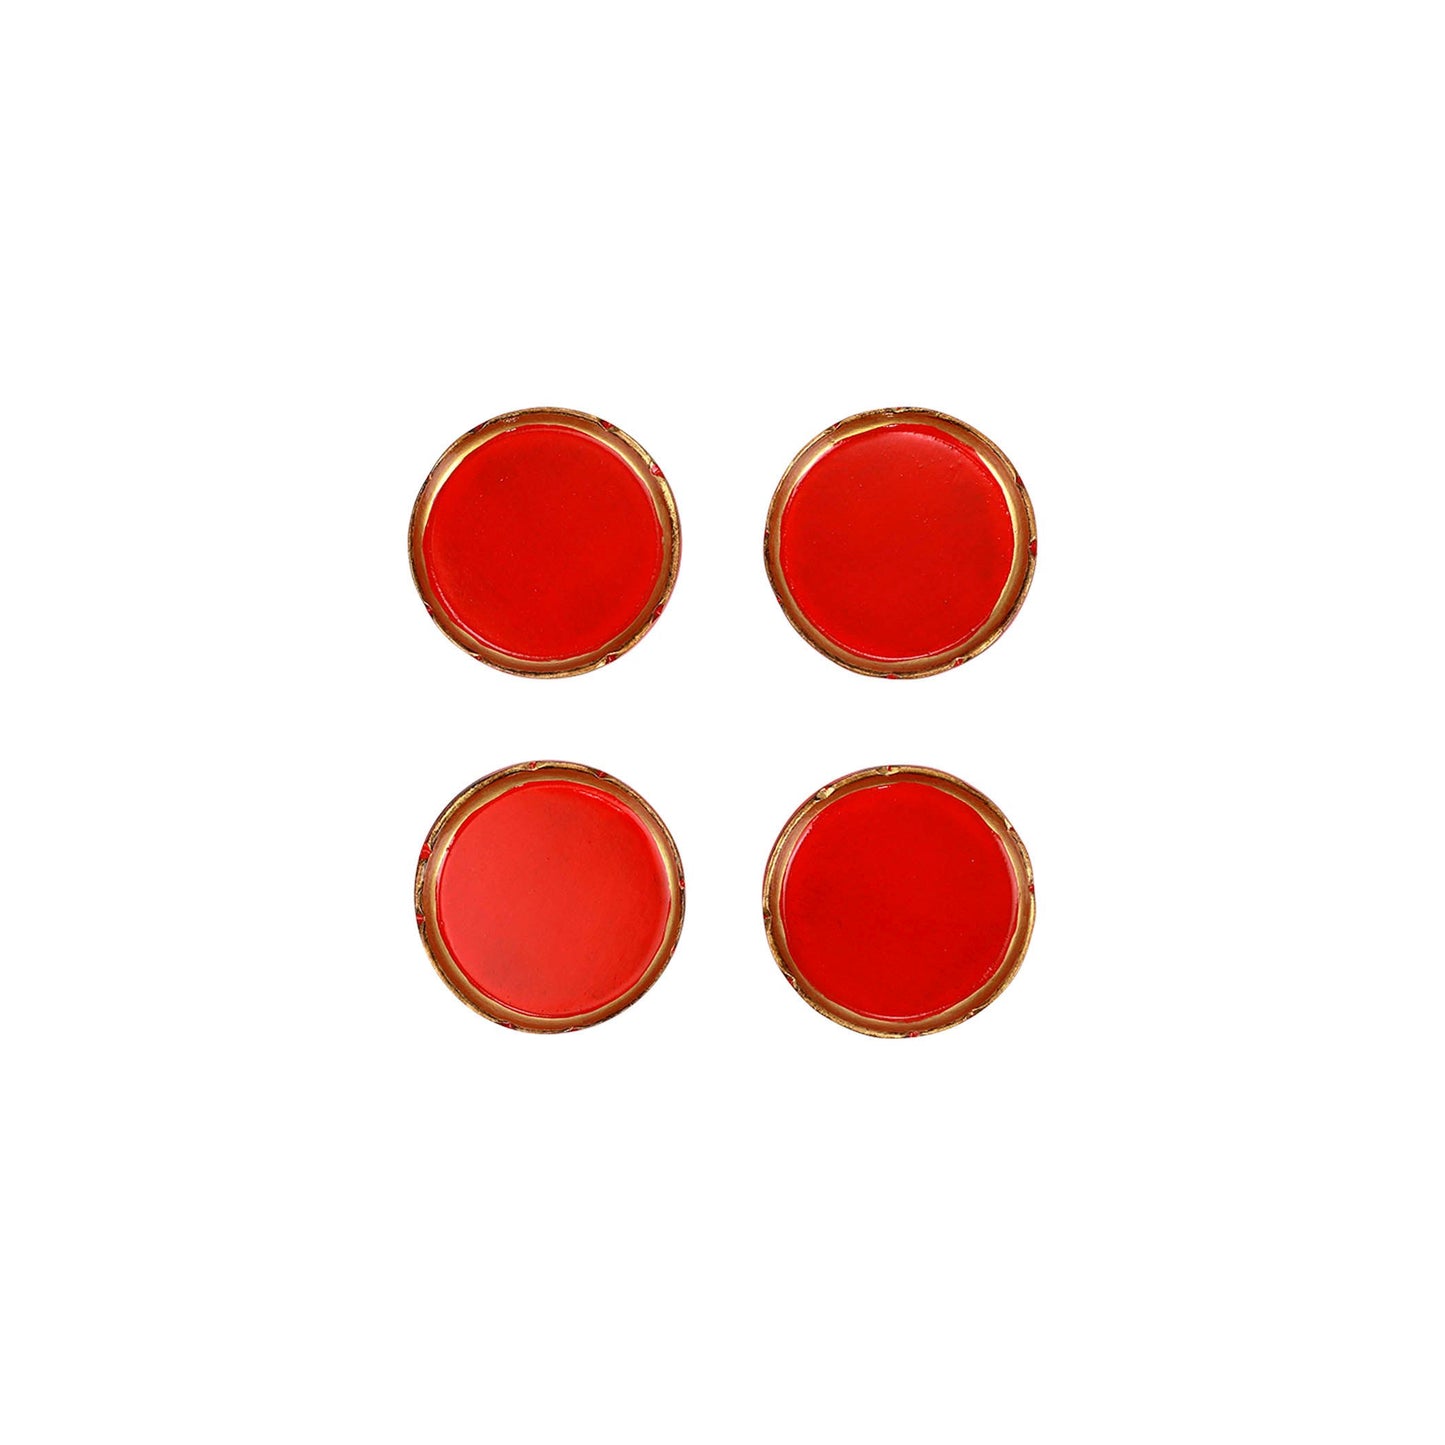 Vietri Florentine Wooden Accessories Red & Gold Coasters Set of 4, 4"D